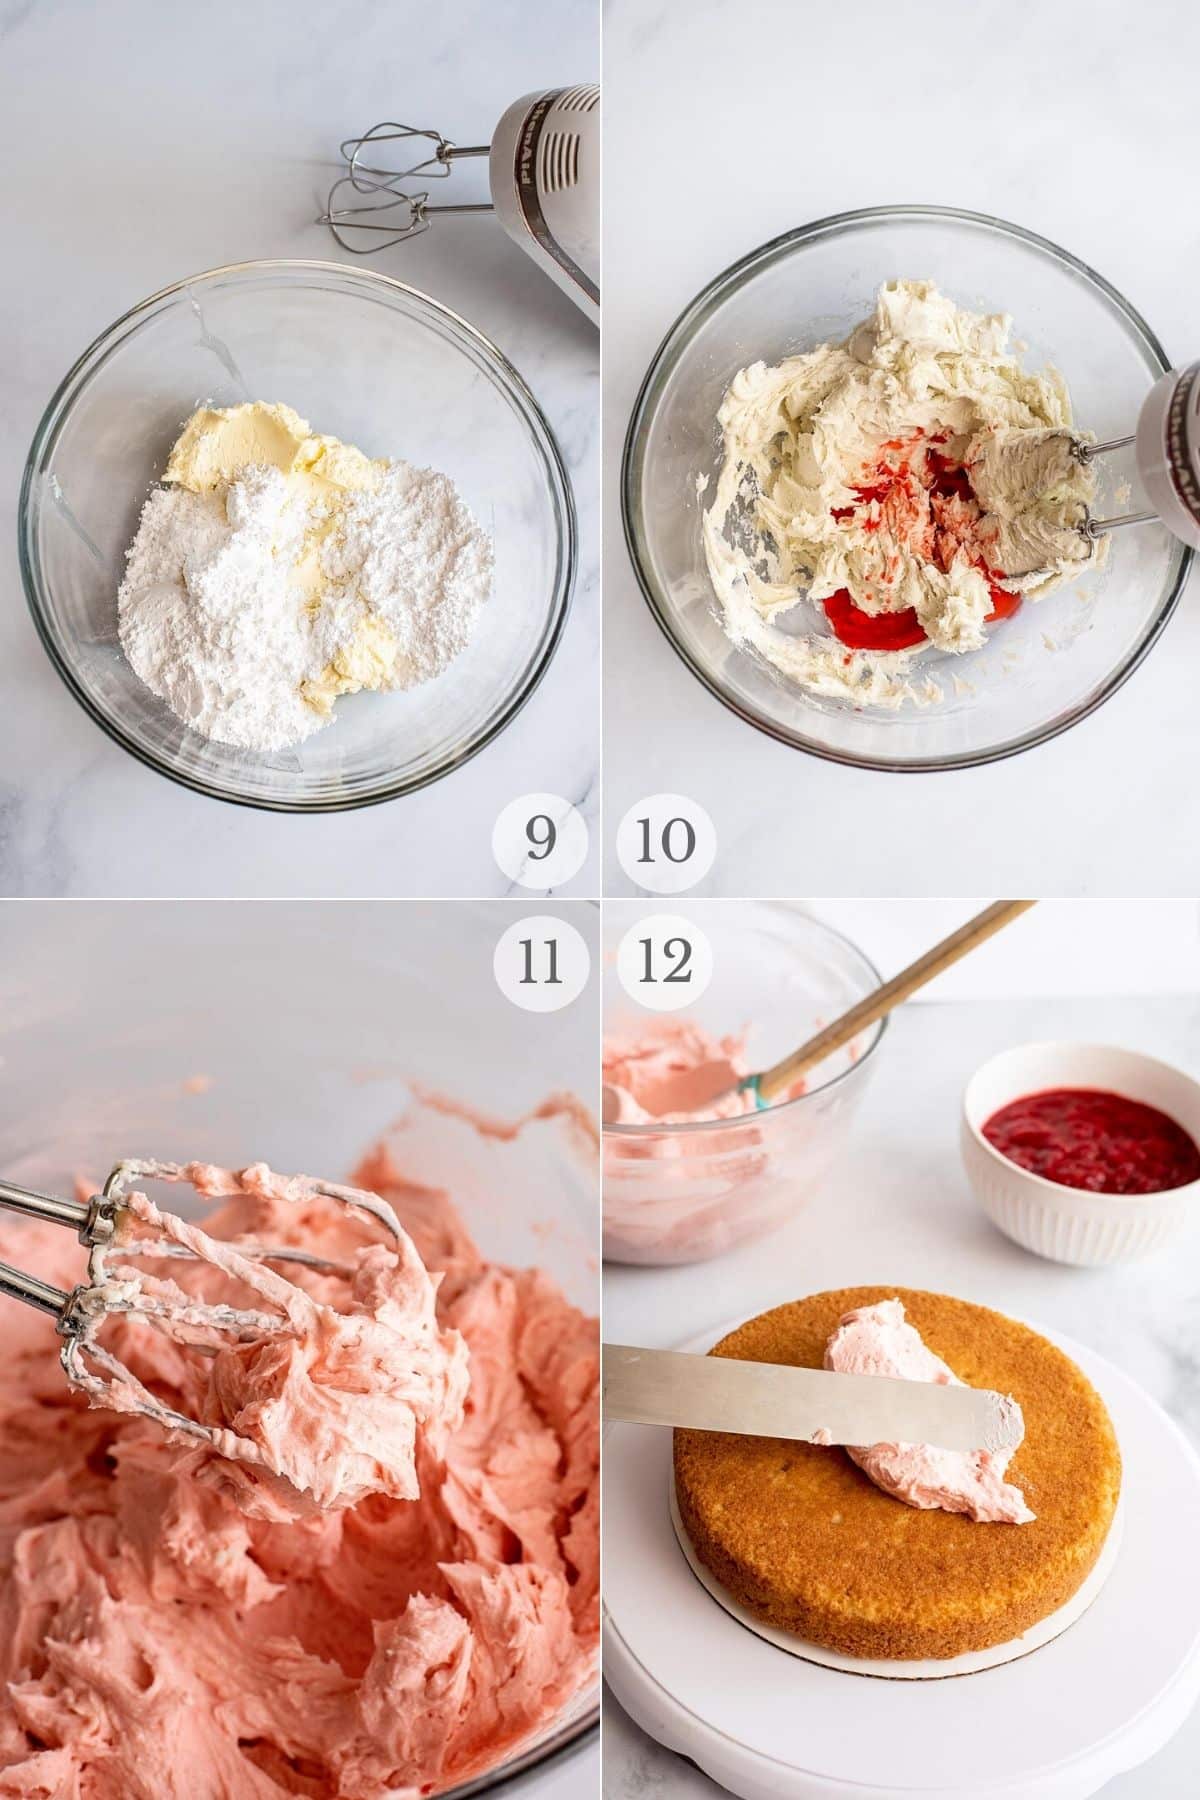 cherry buttercream frosting recipe steps 9-12